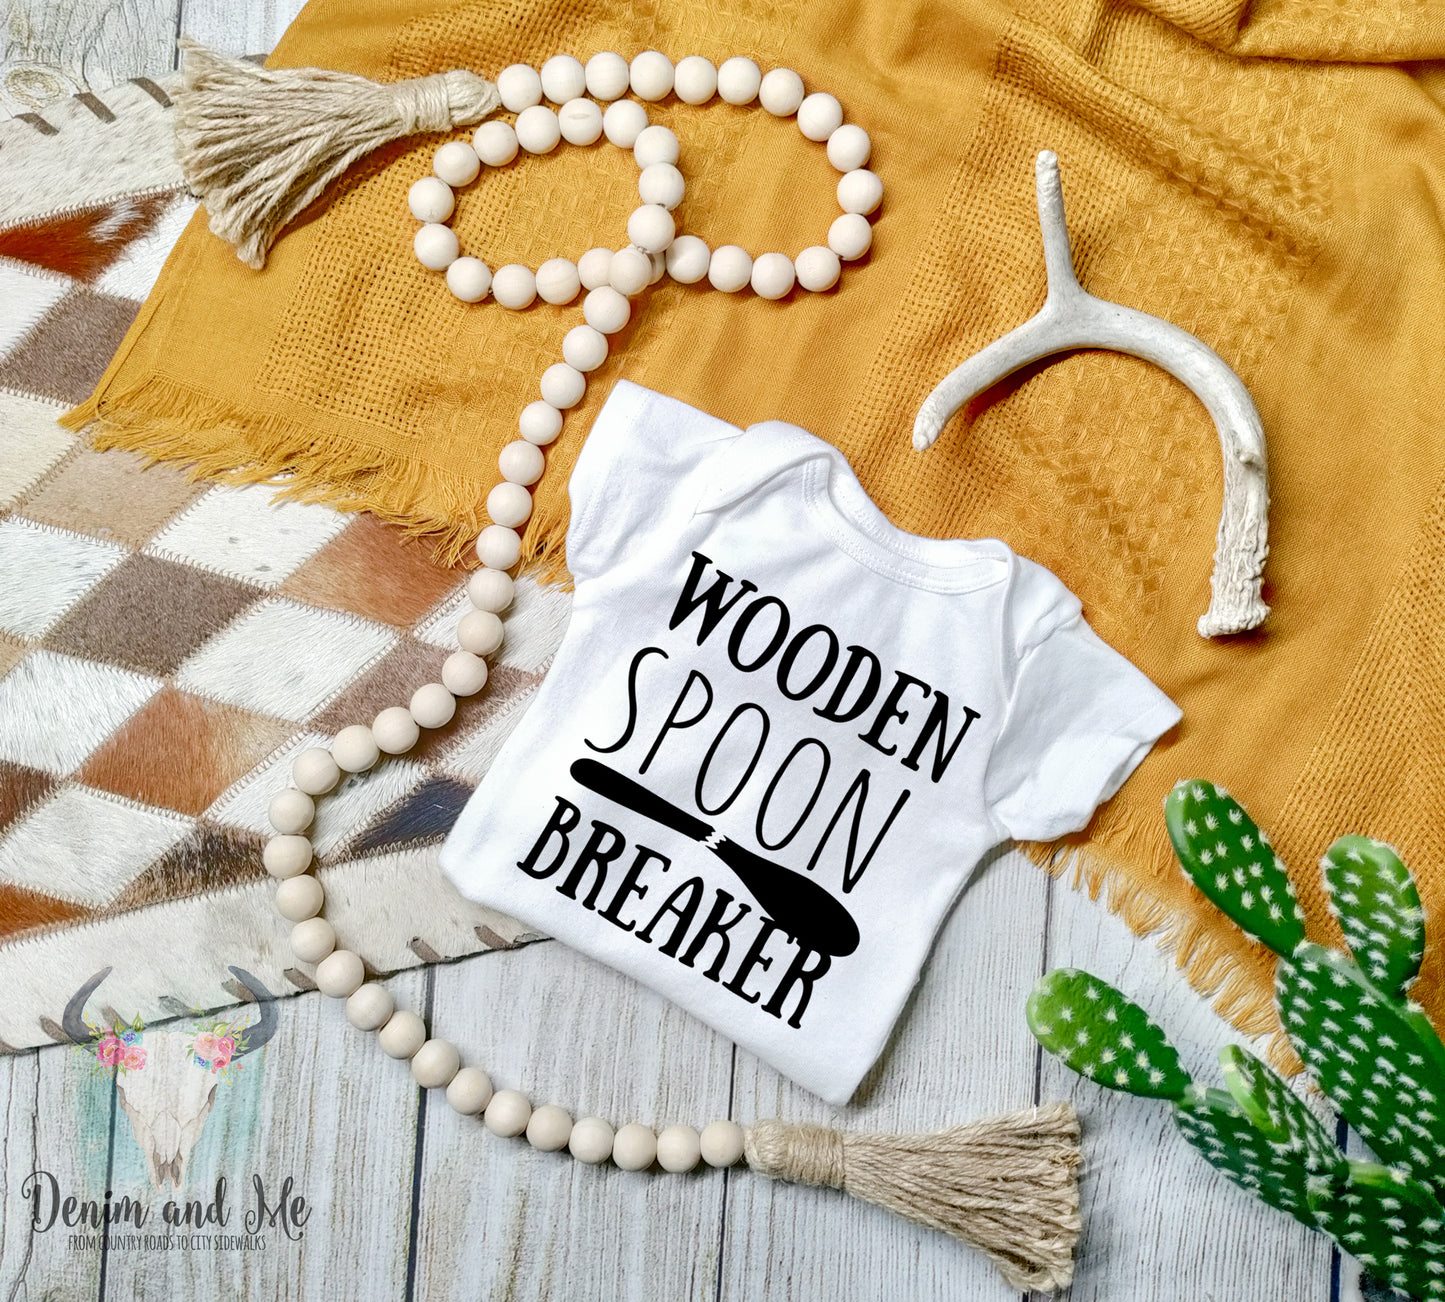 "Wooden Spoon Breaker" Baby Bodysuit